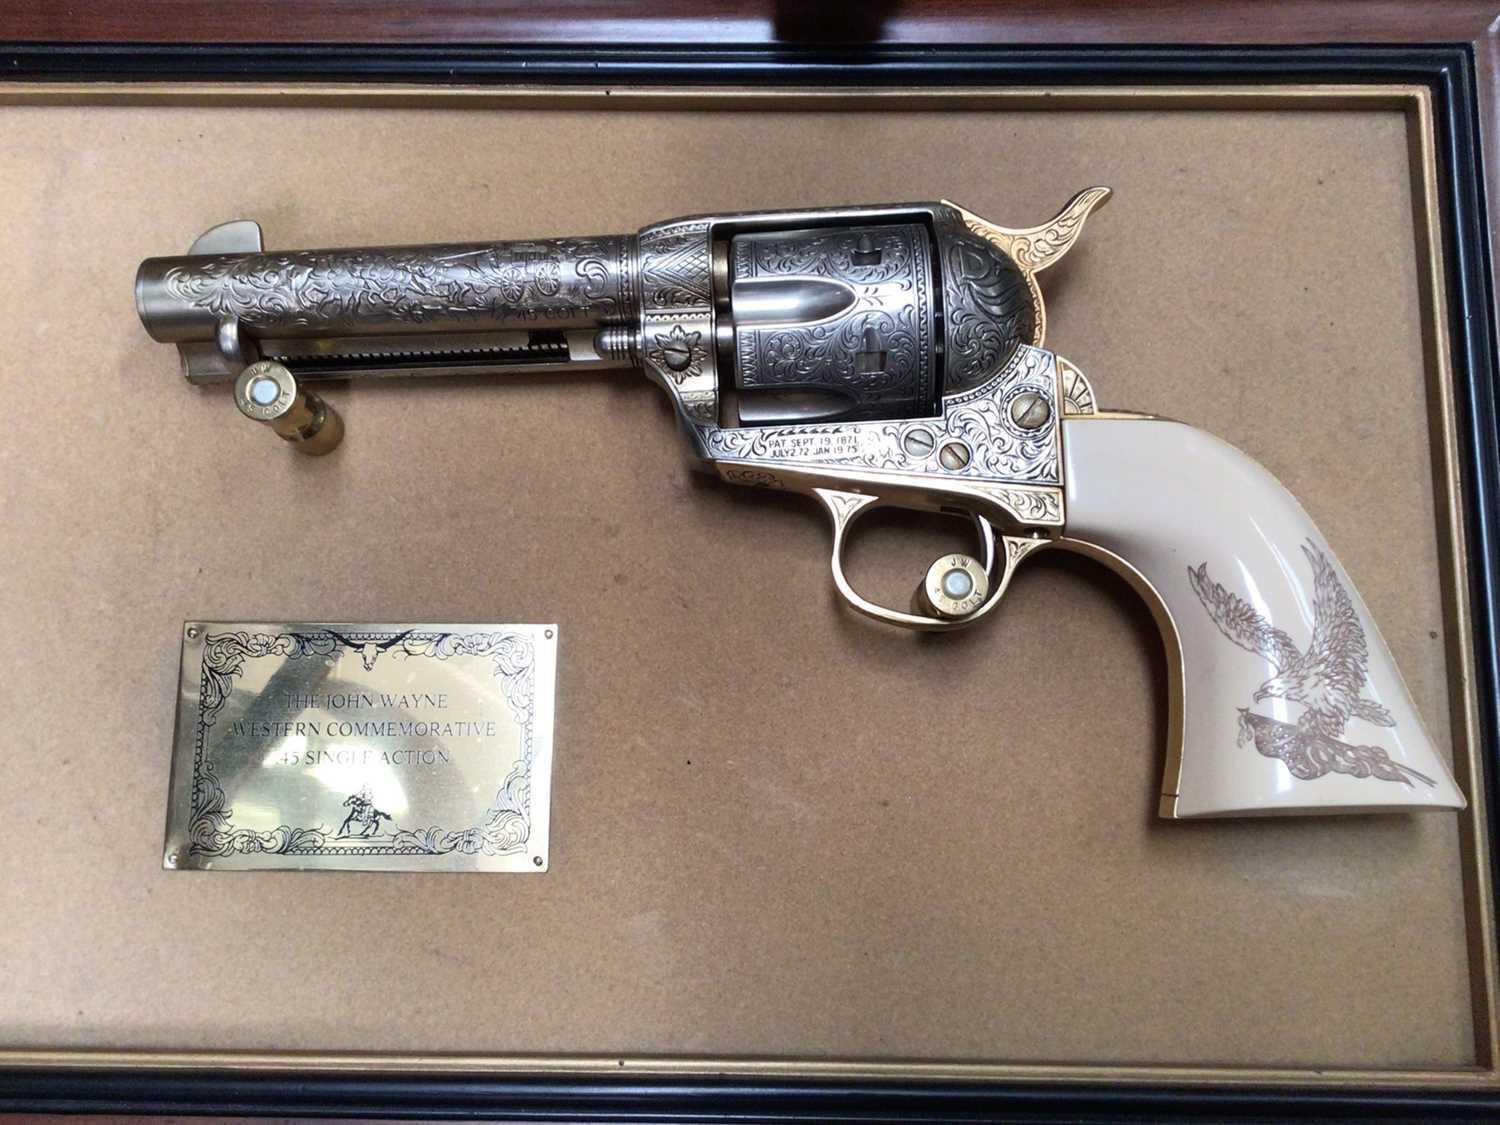 John Wayne replica gun, leather holster, various belt buckles, penknives, lighters etc - Image 2 of 5